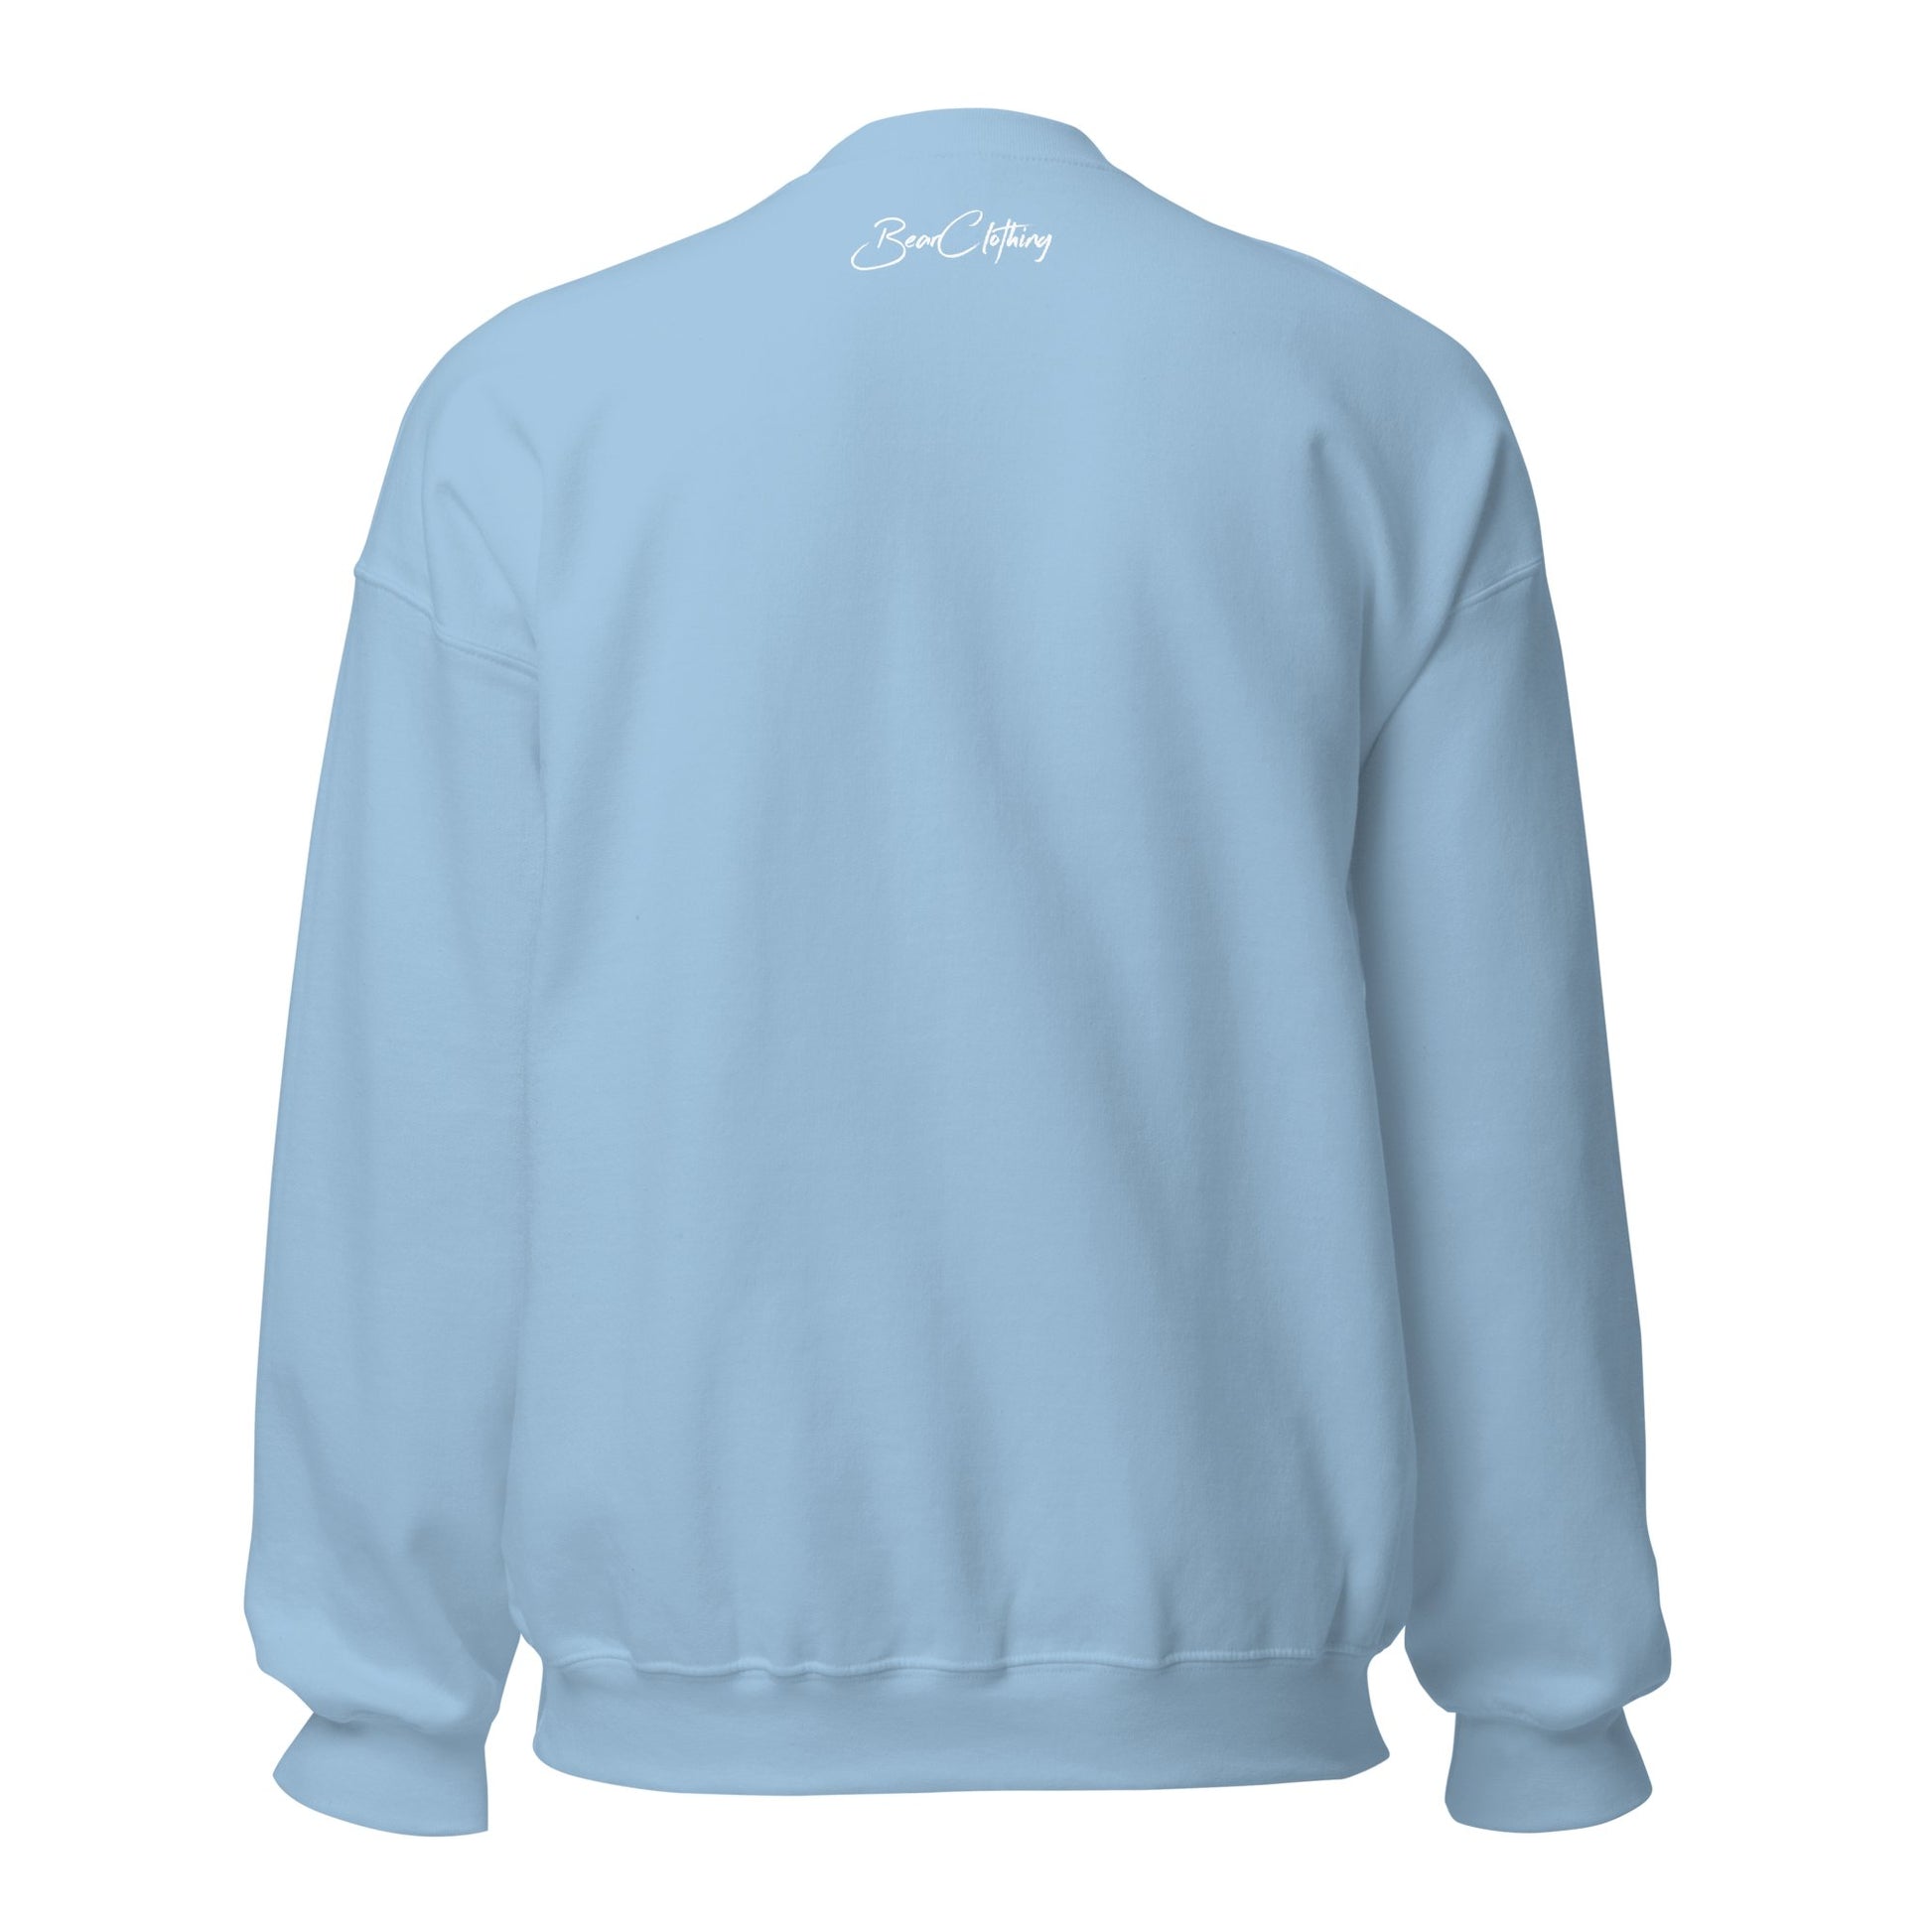 White Print Bear Unisex Sweatshirt up to 5xl available .... - Bearclothing